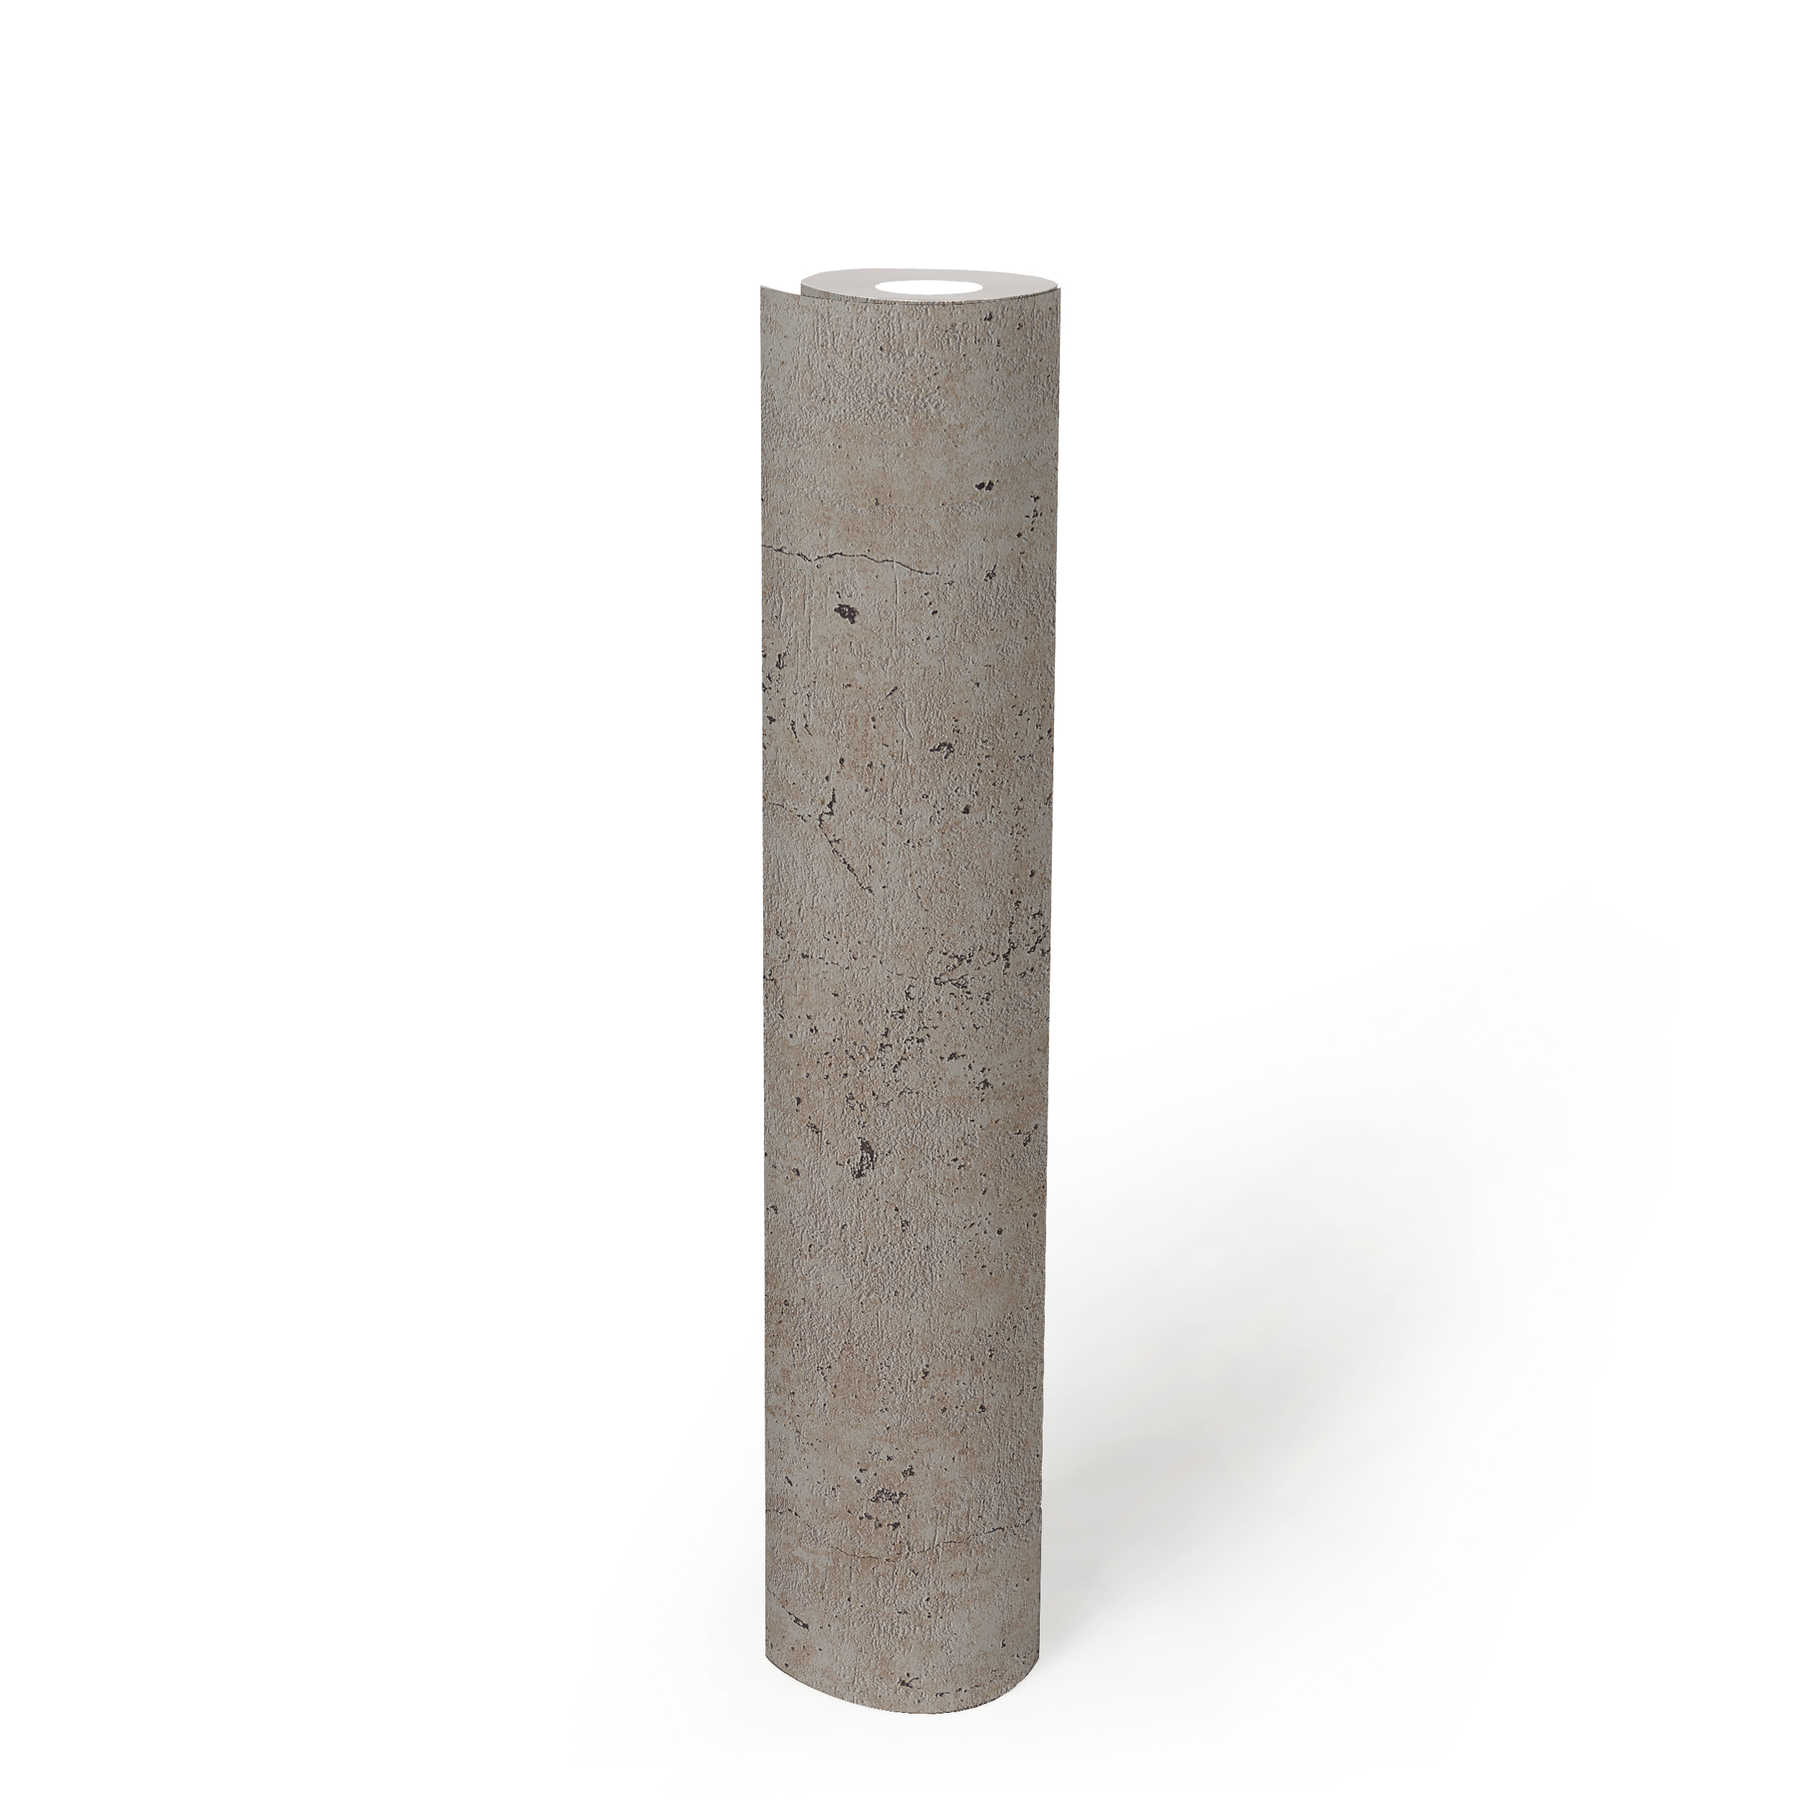             Tapete Beton-Optik rustikal im Industrial Style – Grau, Braun
        